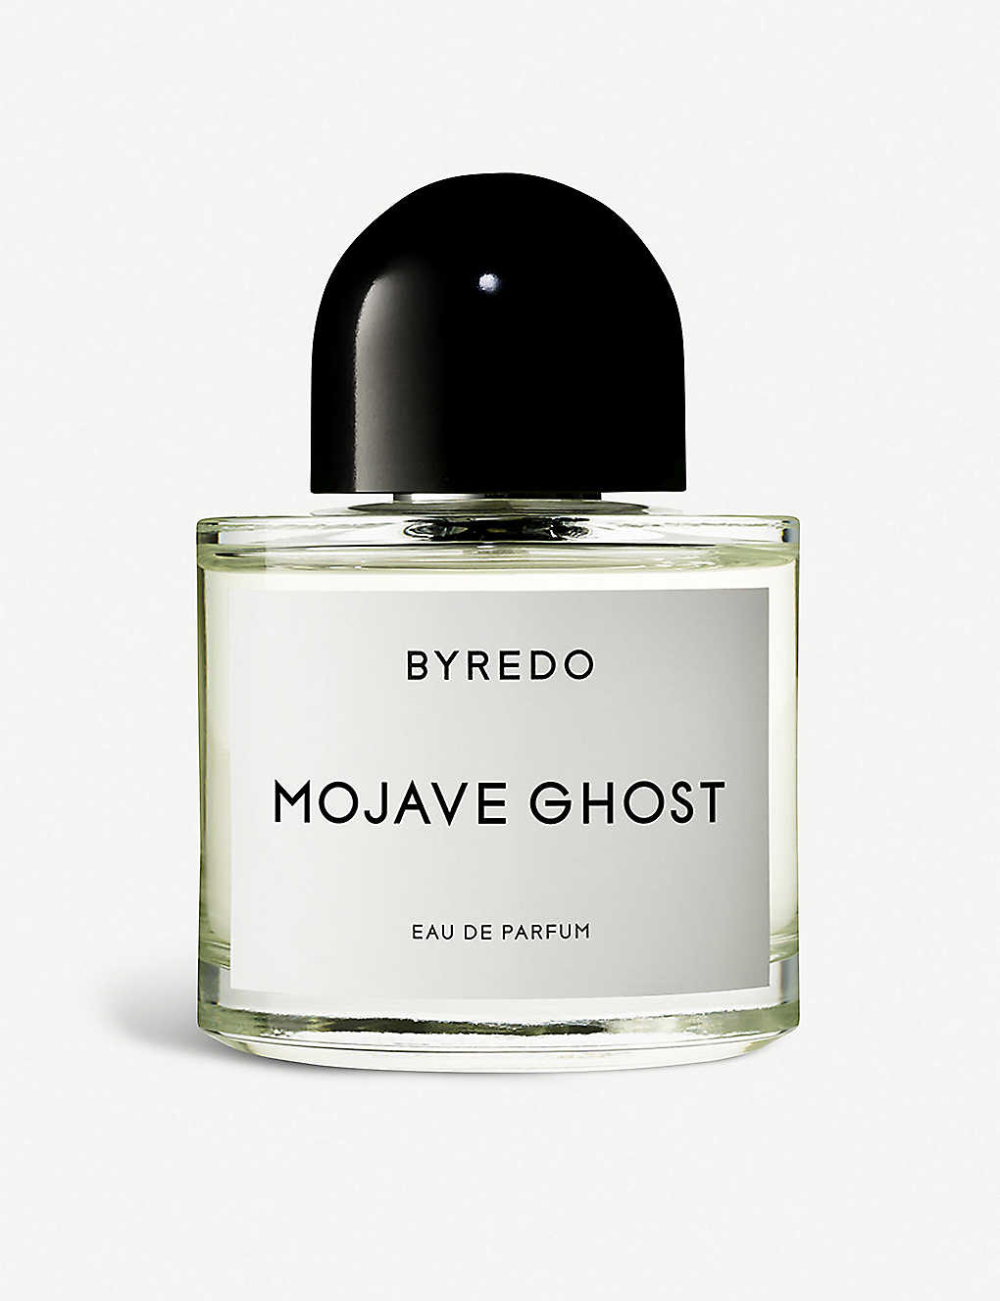 Mojave Ghost by Byredo